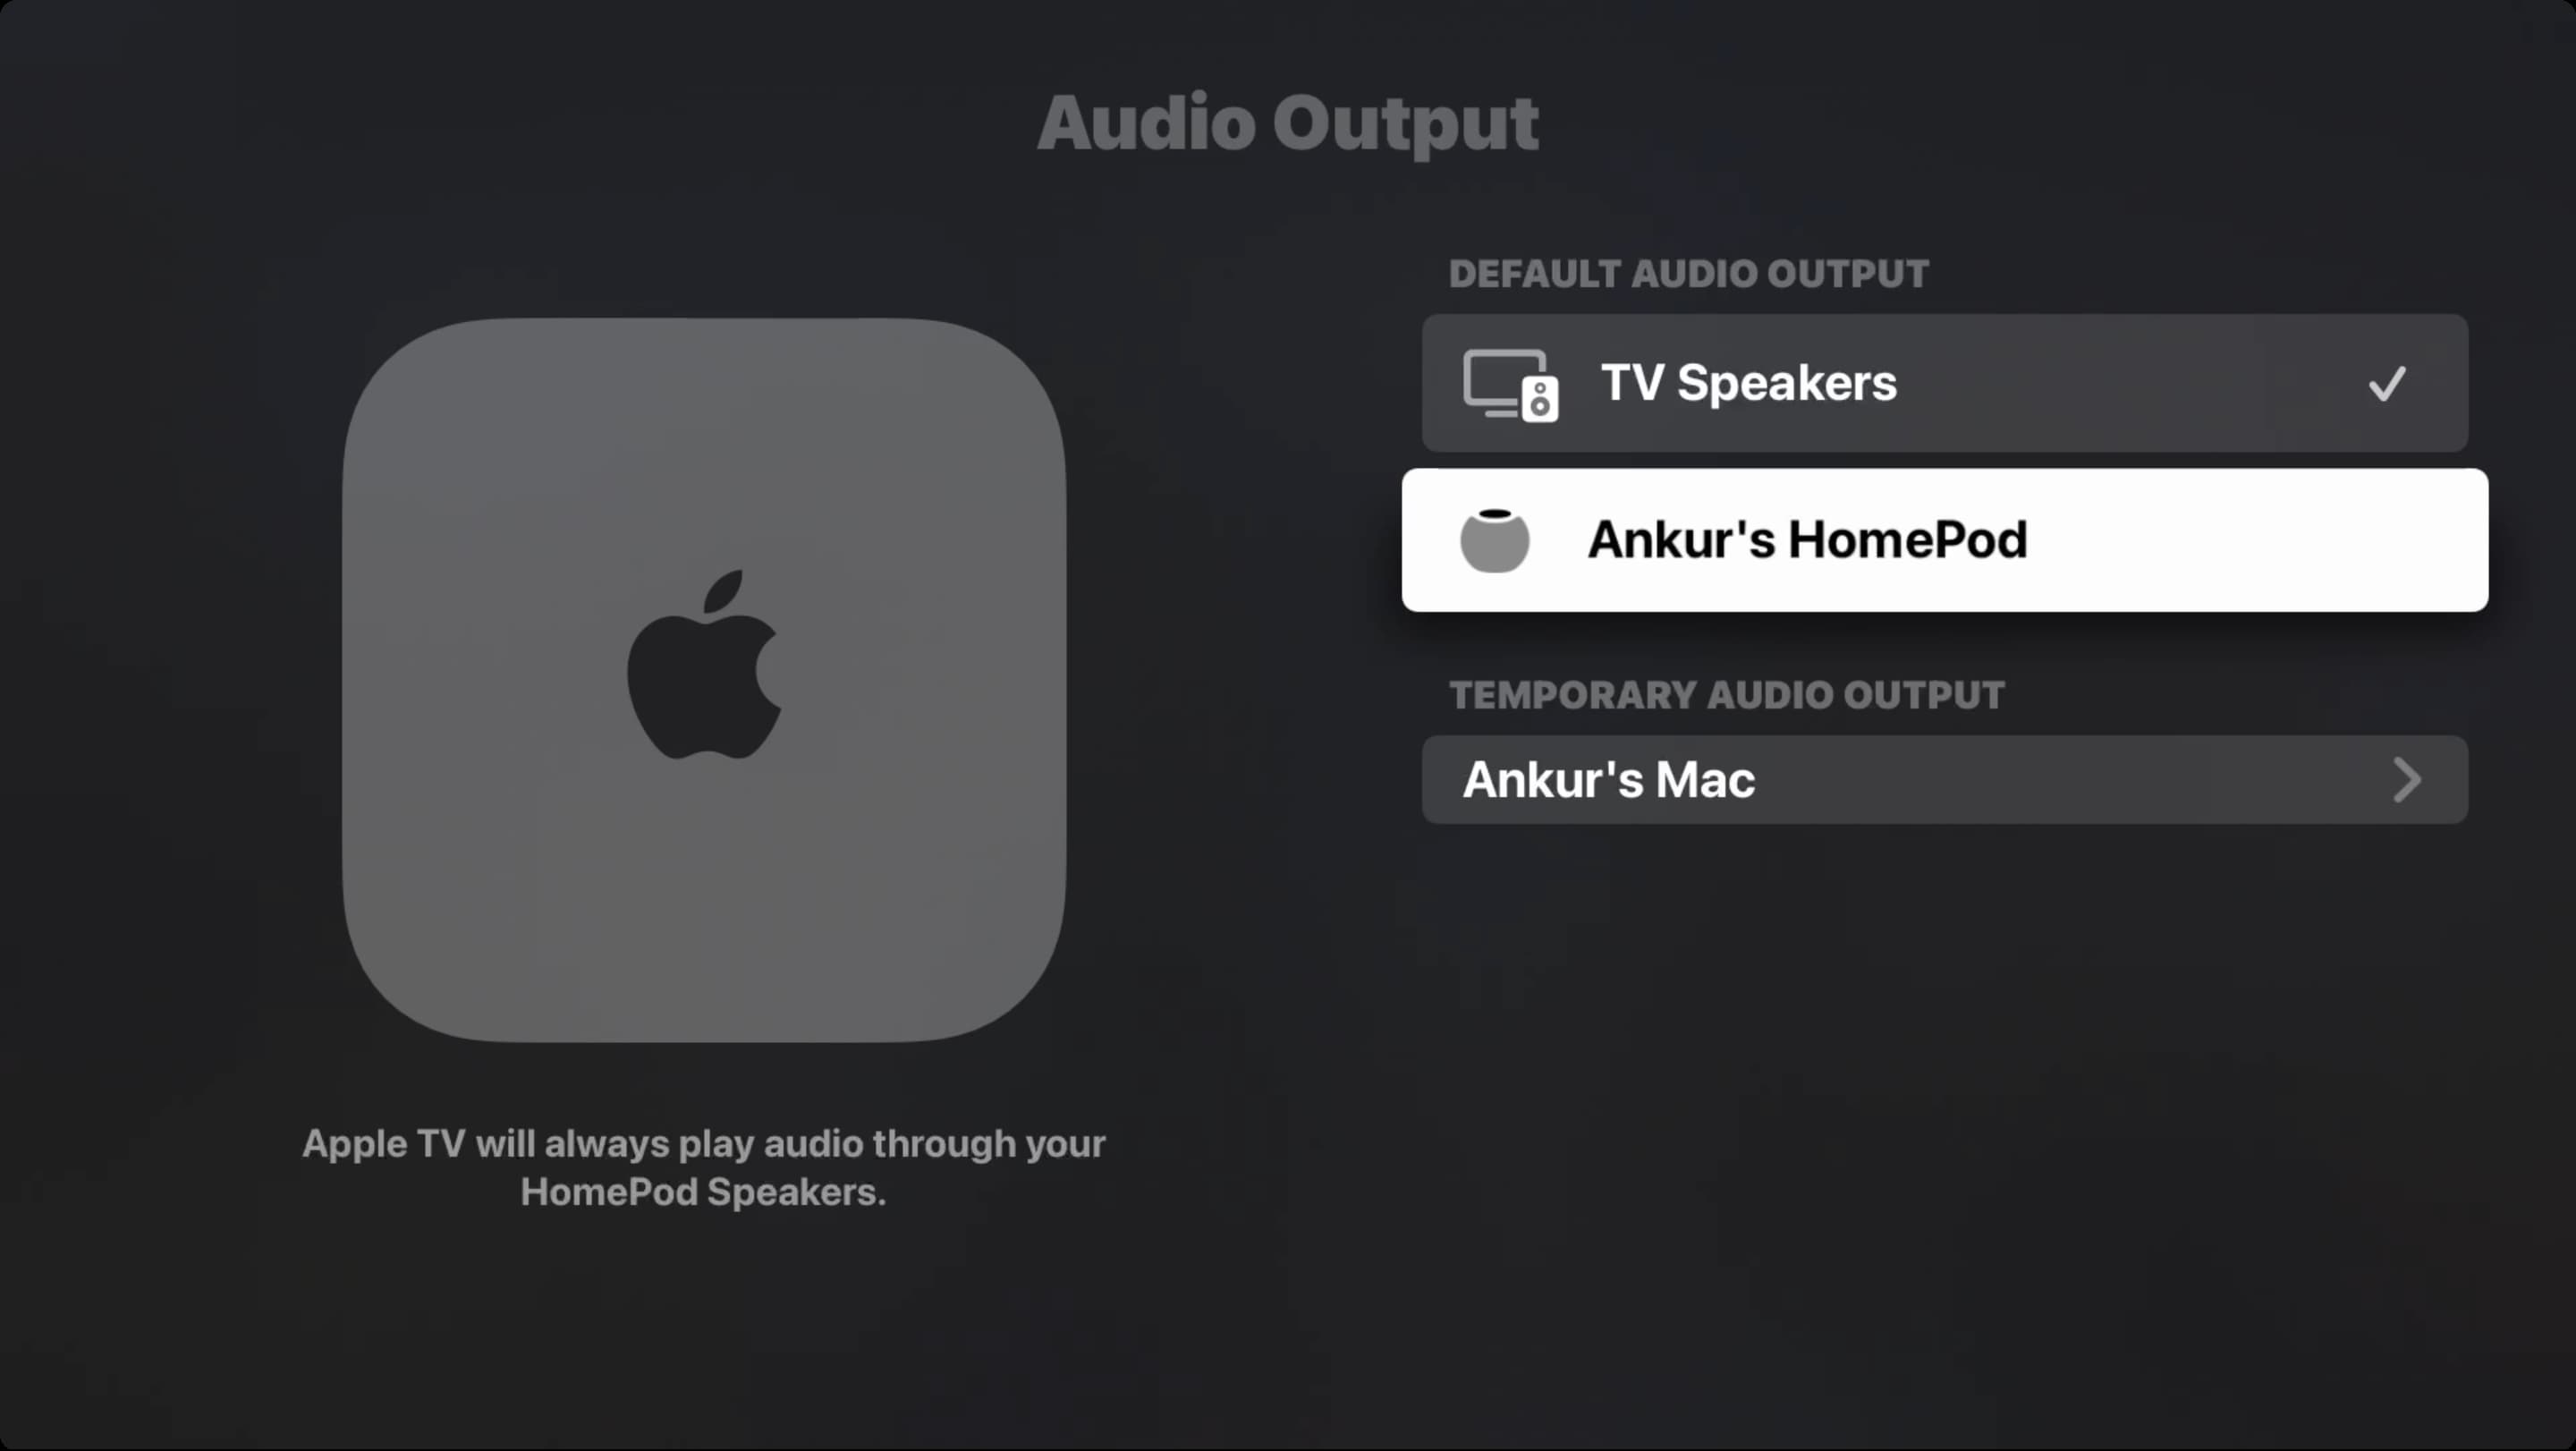 Set HomePod as Default Audio Output on Apple TV